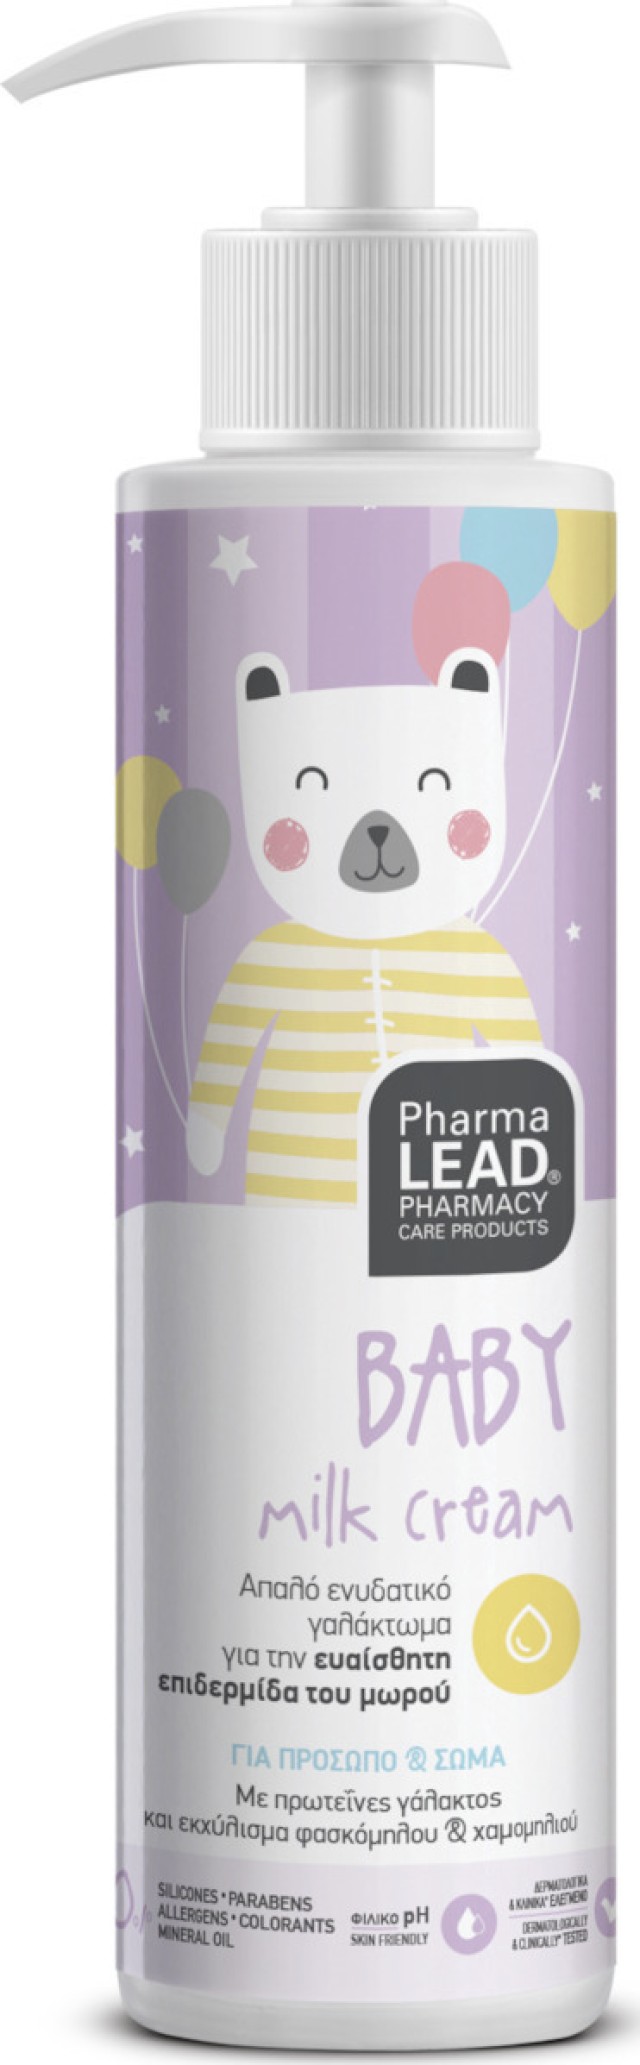 PharmaLead Baby Milk Cream Παιδικό Ενυδατικό Γαλάκτωμα για Πρόσωπο - Σώμα Ελαφριάς Υφής 150ml